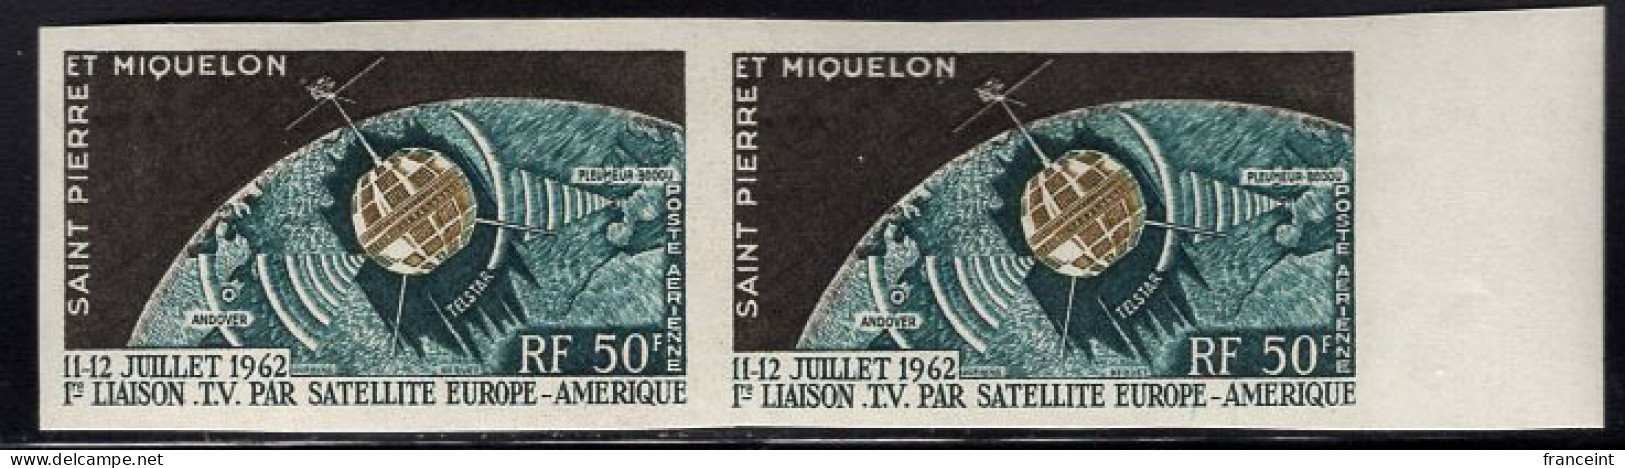 ST. PIERRE & MIQUELON(1962) Telstar Satellite. Imperforate Pair. Scott No C26, Yvert No PA29. - Sin Dentar, Pruebas De Impresión Y Variedades